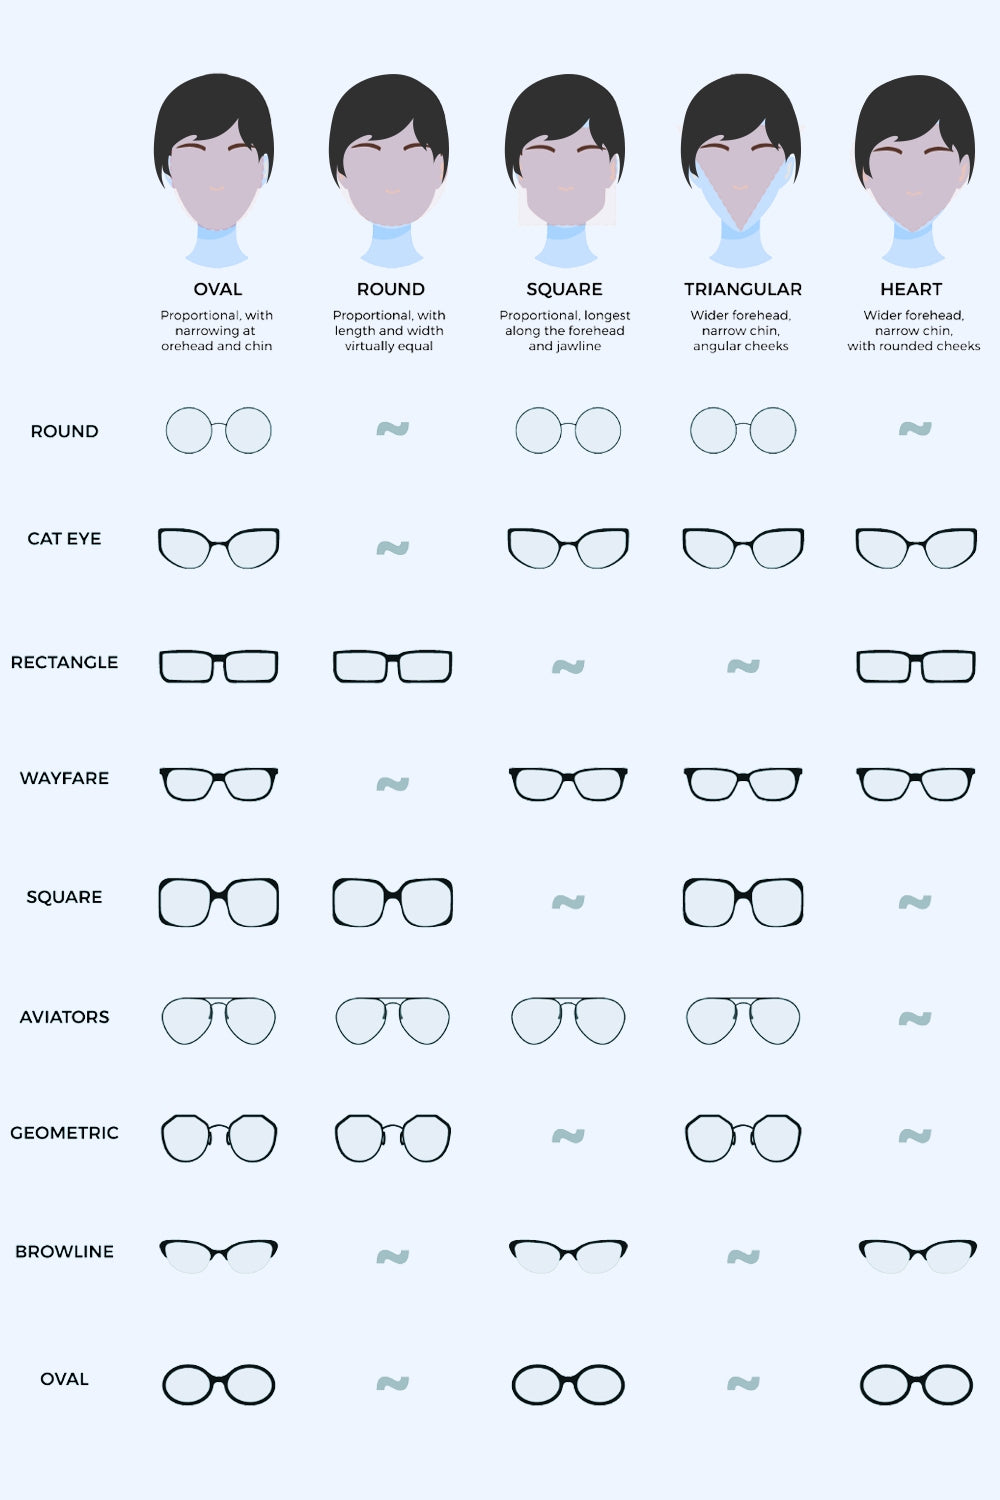 Sassy Cat-Eye Acetate Frame Sunglasses